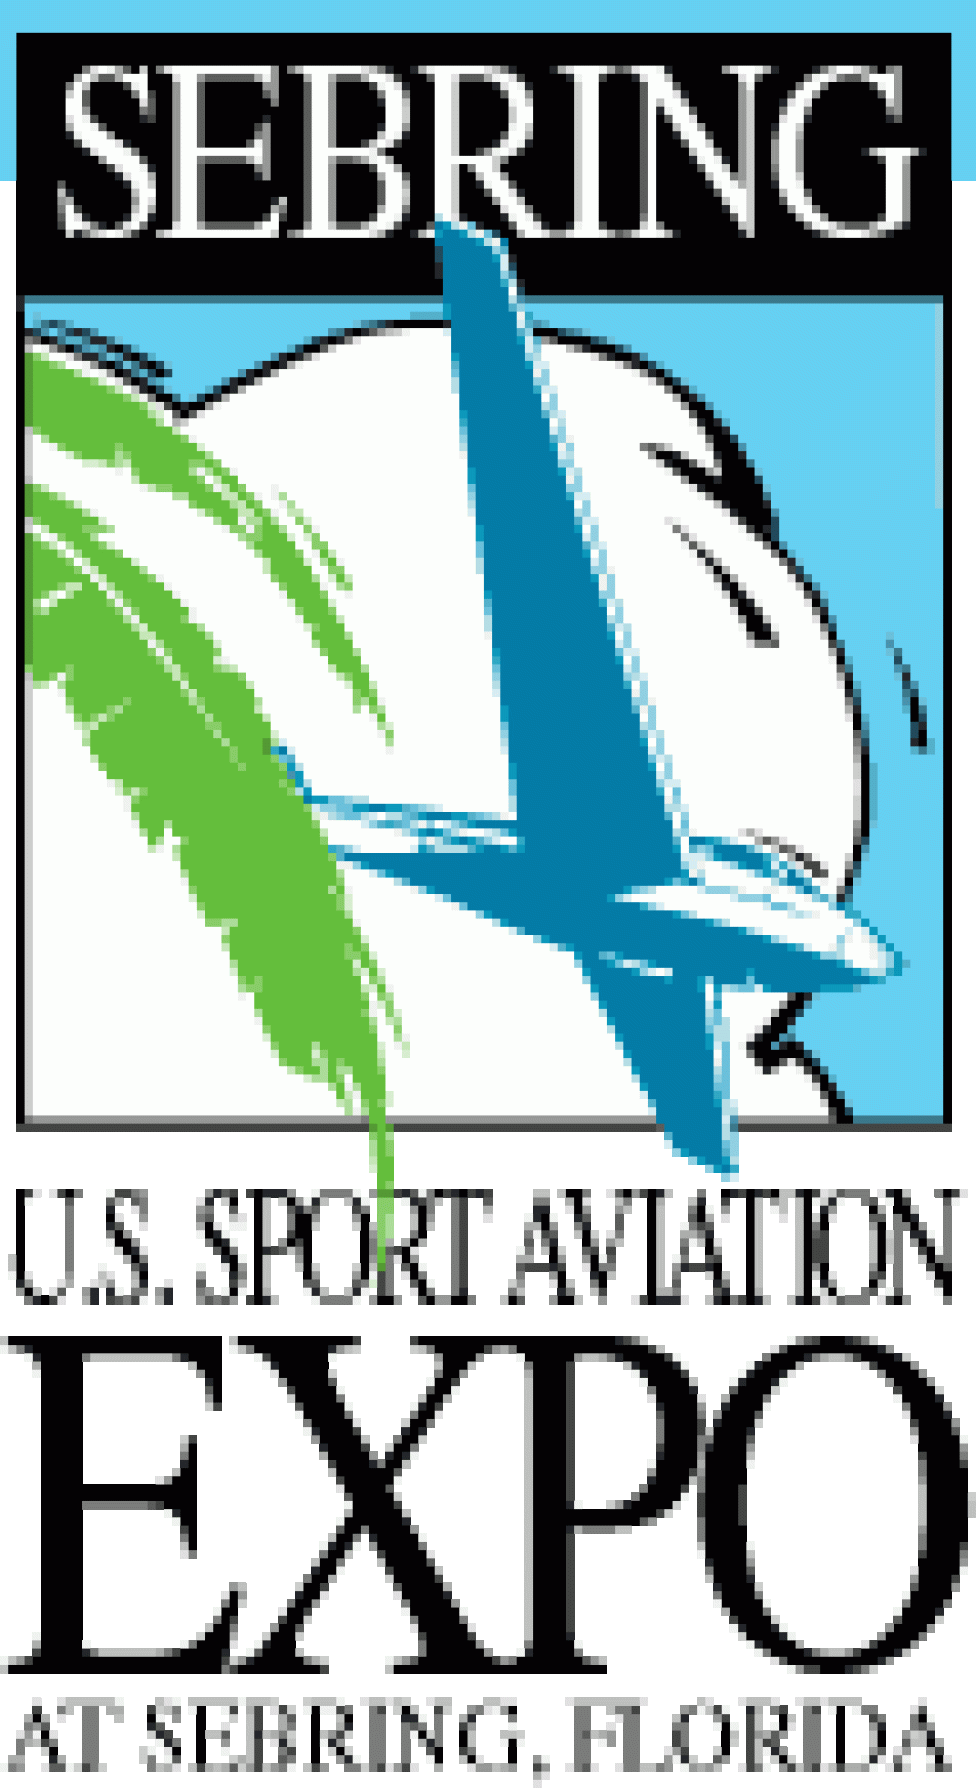 U.S. Sport Aviation Expo 2010